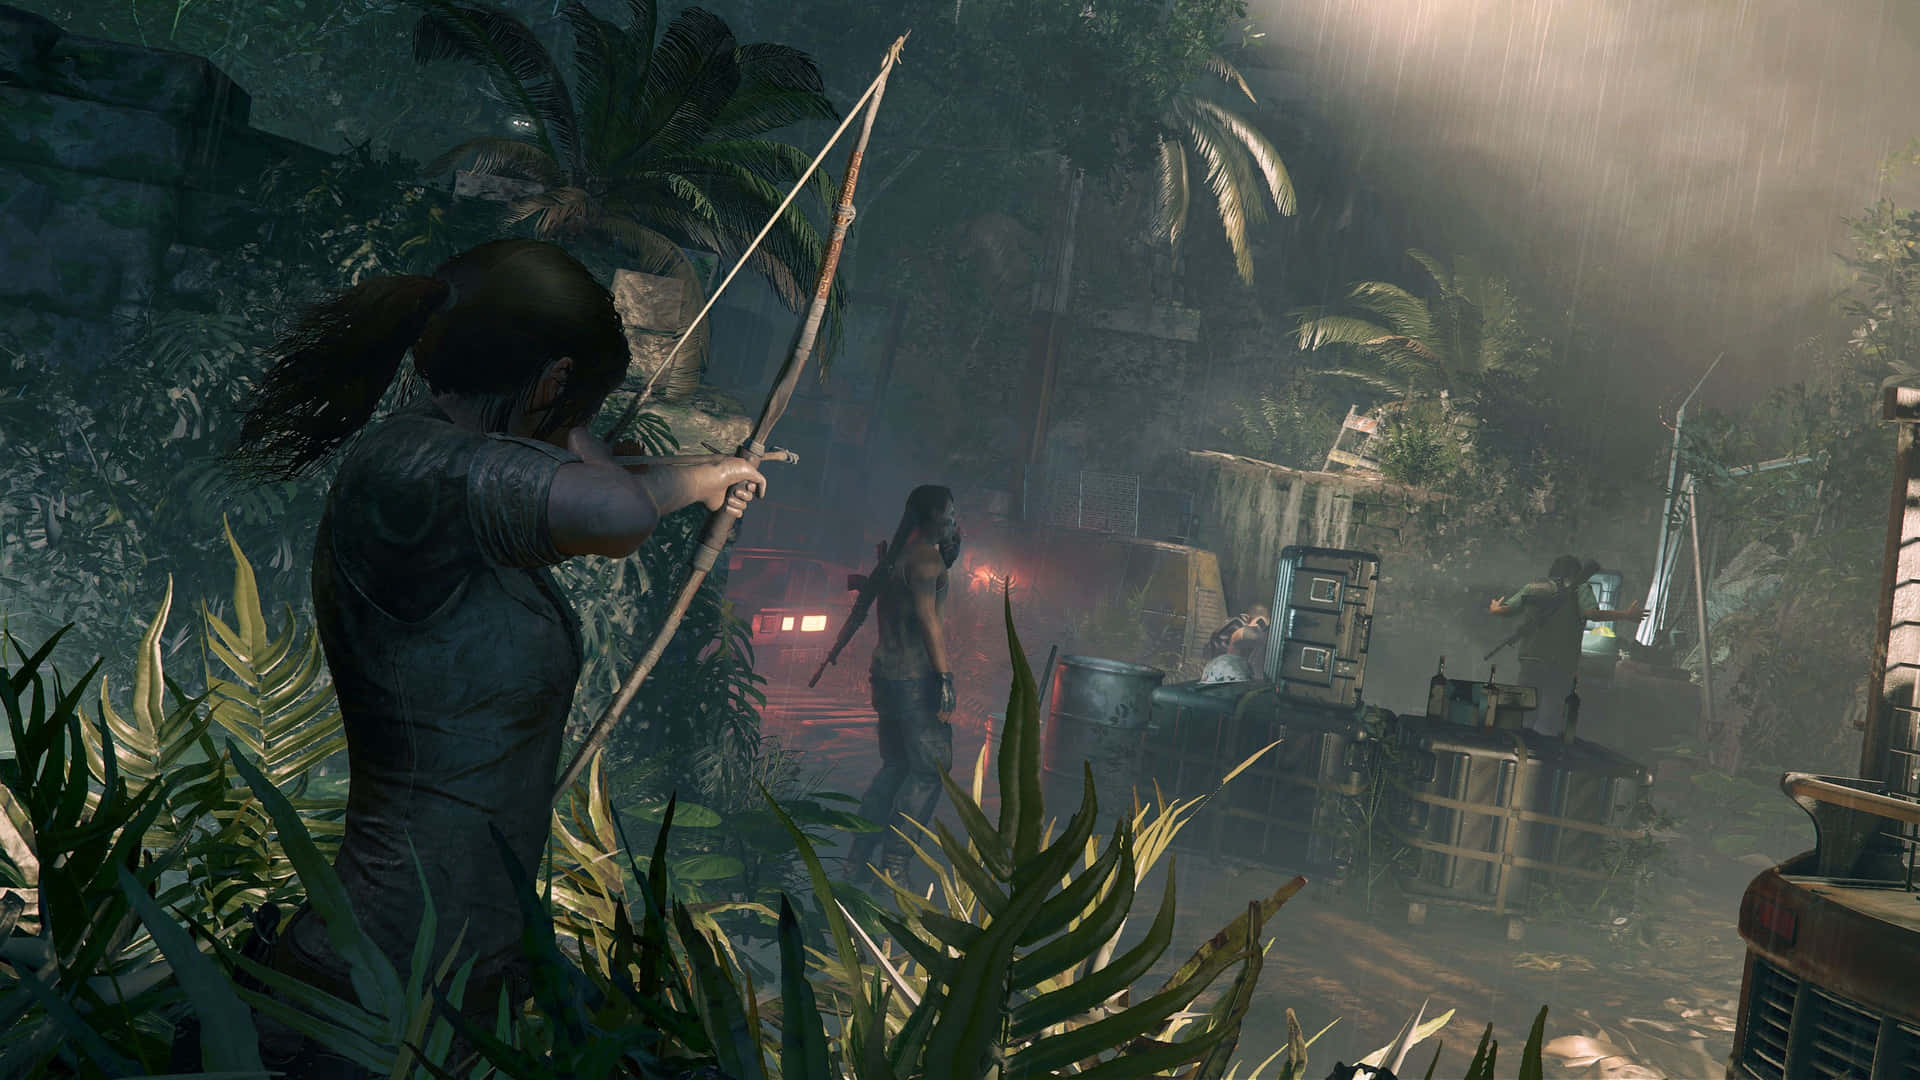 Lara Croft journeys through harsh terrain in Shadow of the Tomb Raider